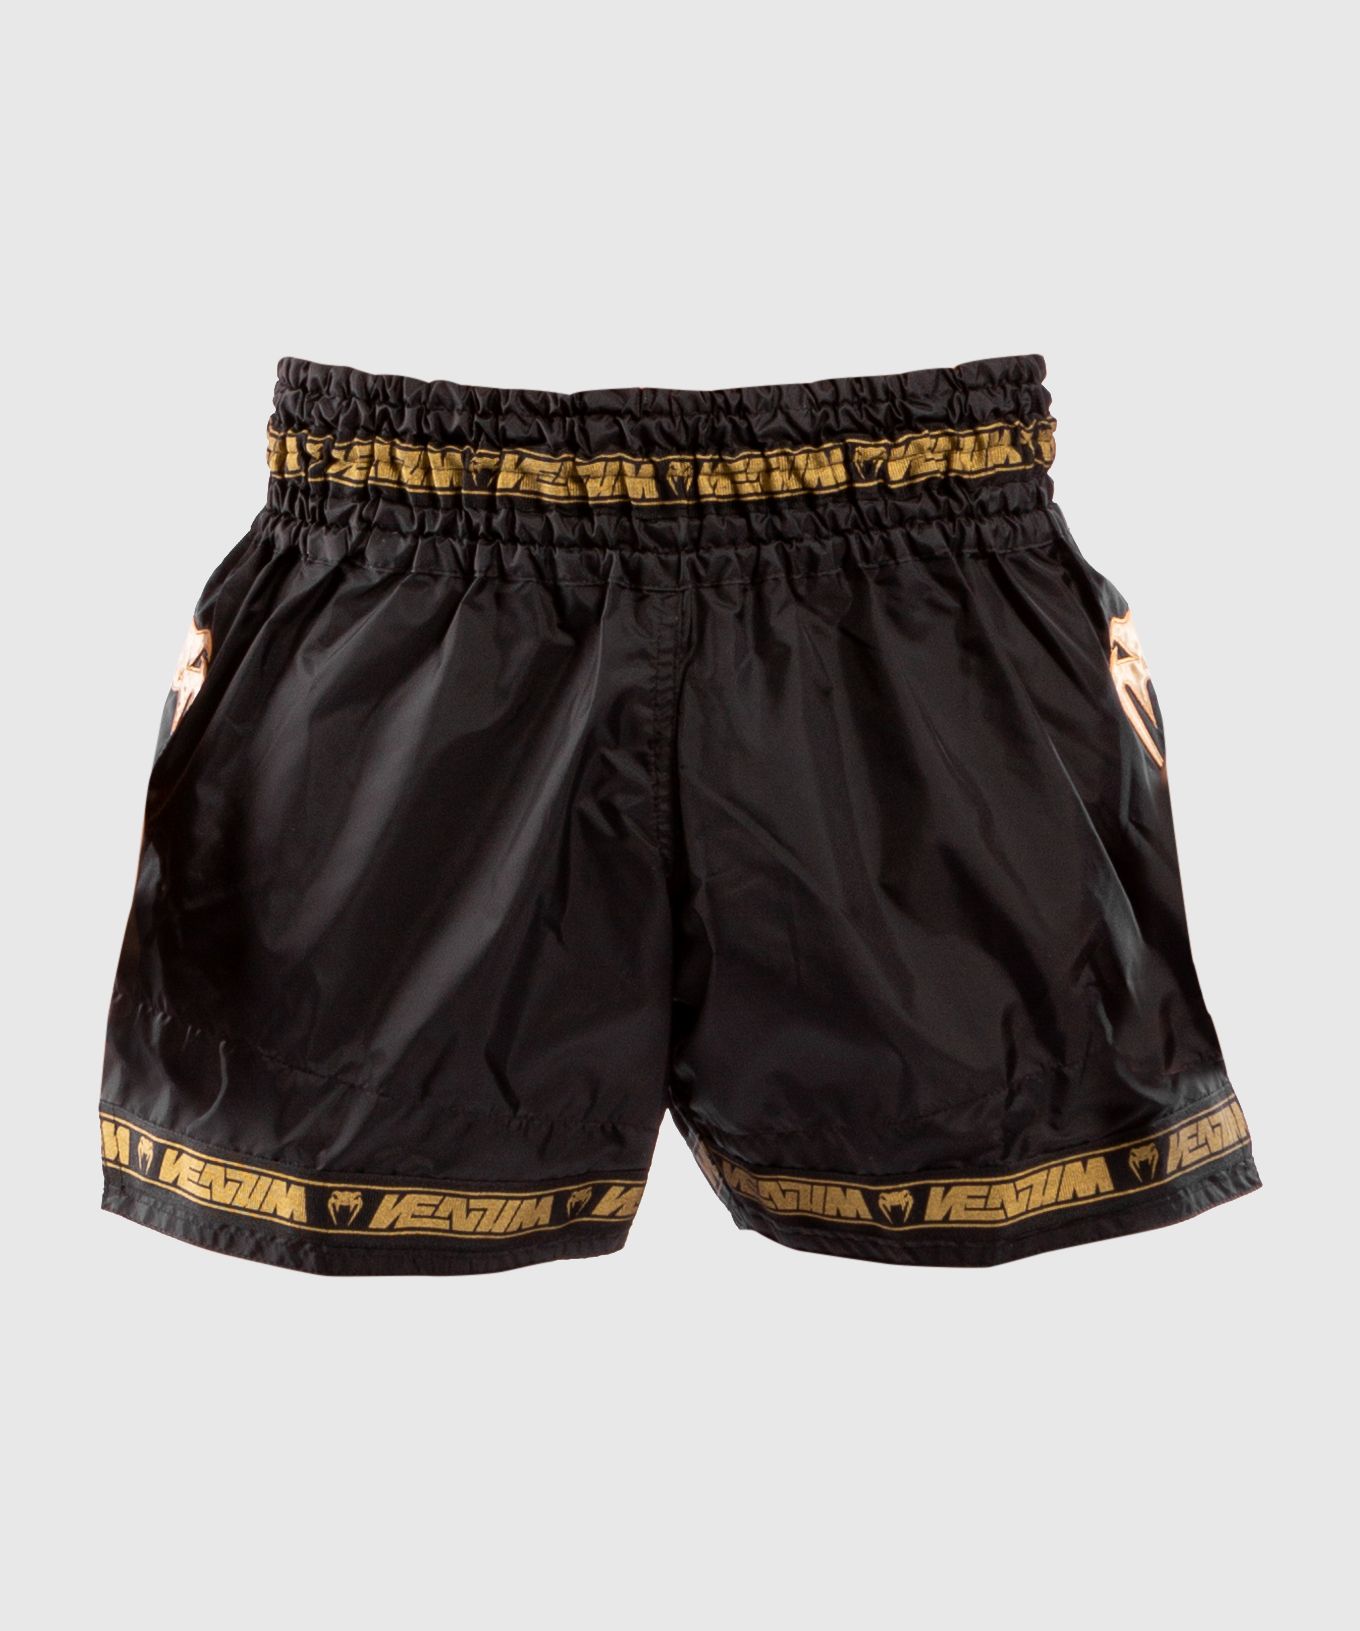 Venum Muay Thai Parachute Shorts - Schwarz / Gold